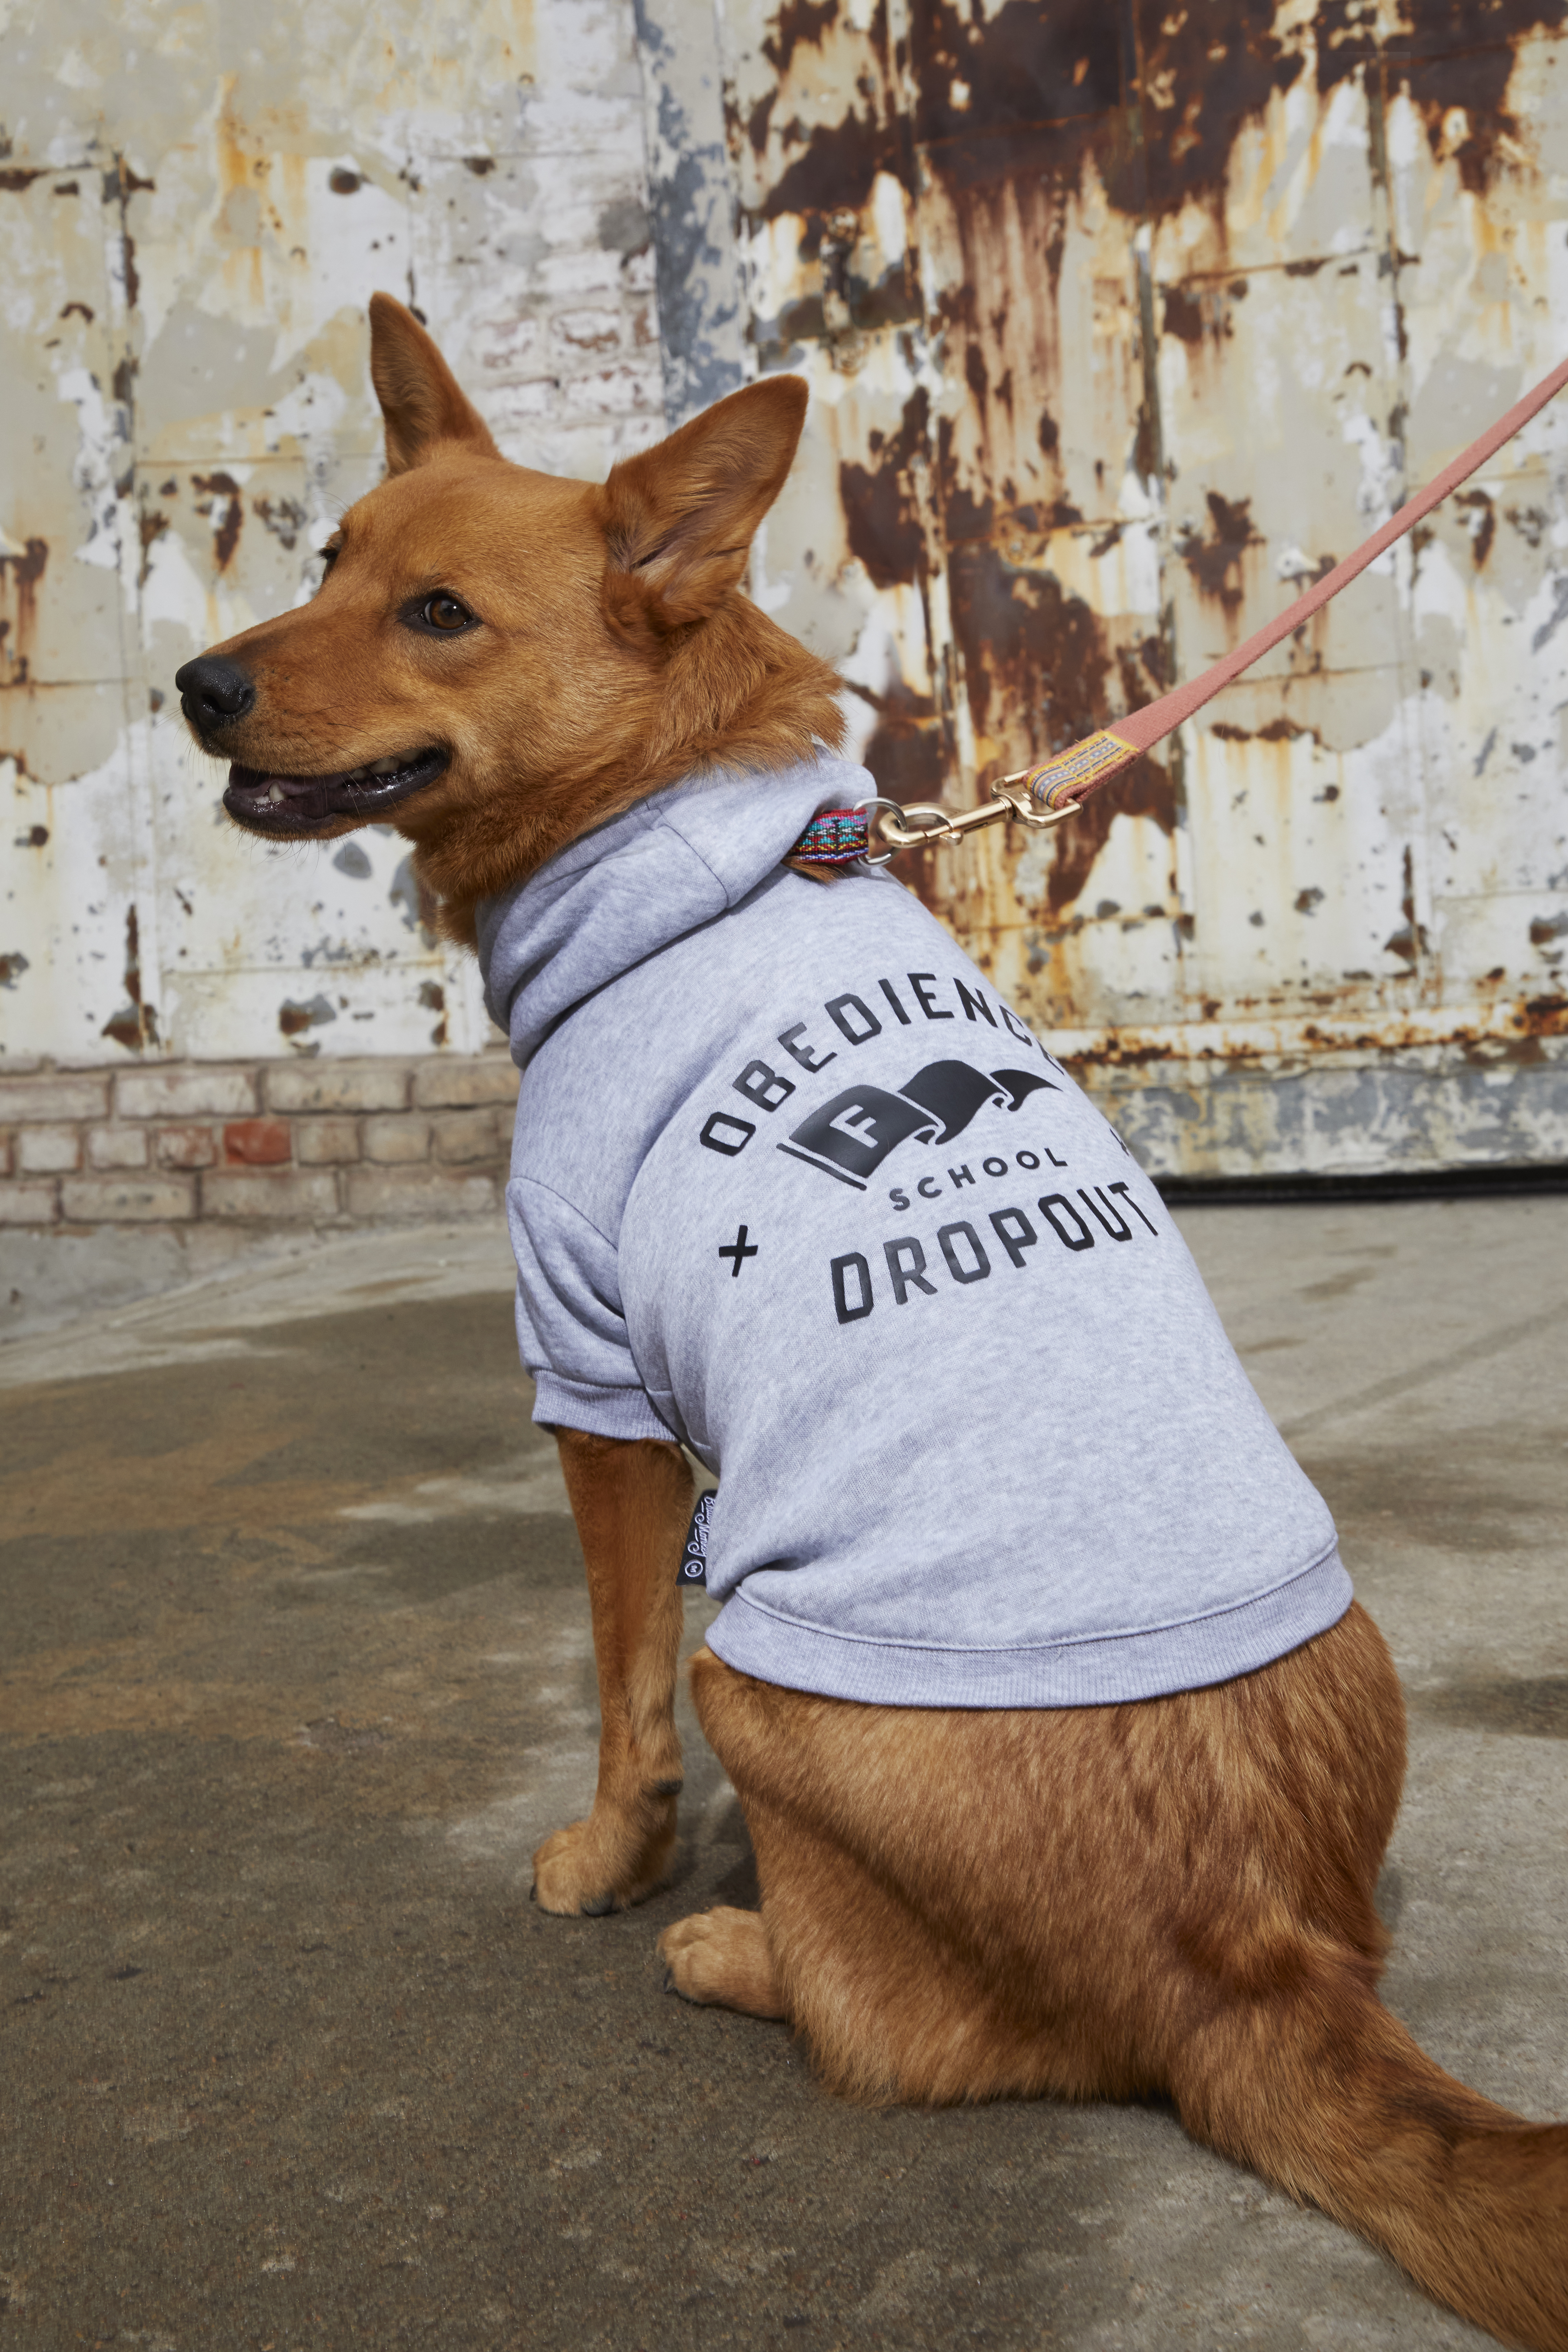 Obedience School Dropout Dog Hoodie - M